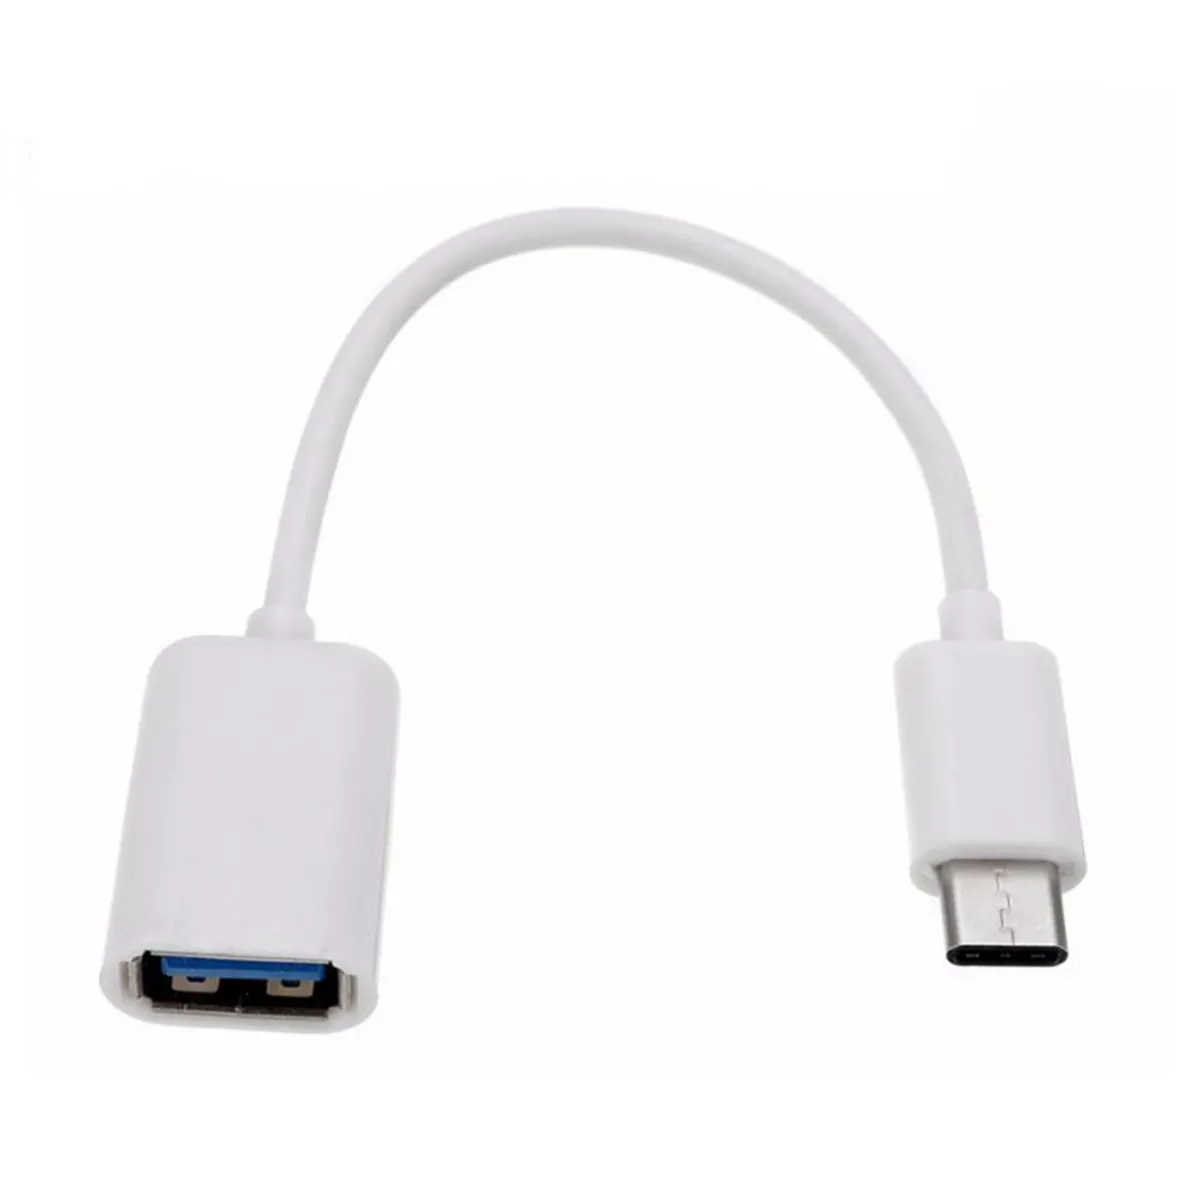 Câble USB Type C OTG femelle, adaptateur, connecteur dateur, Type C mâle à femelle, blanc